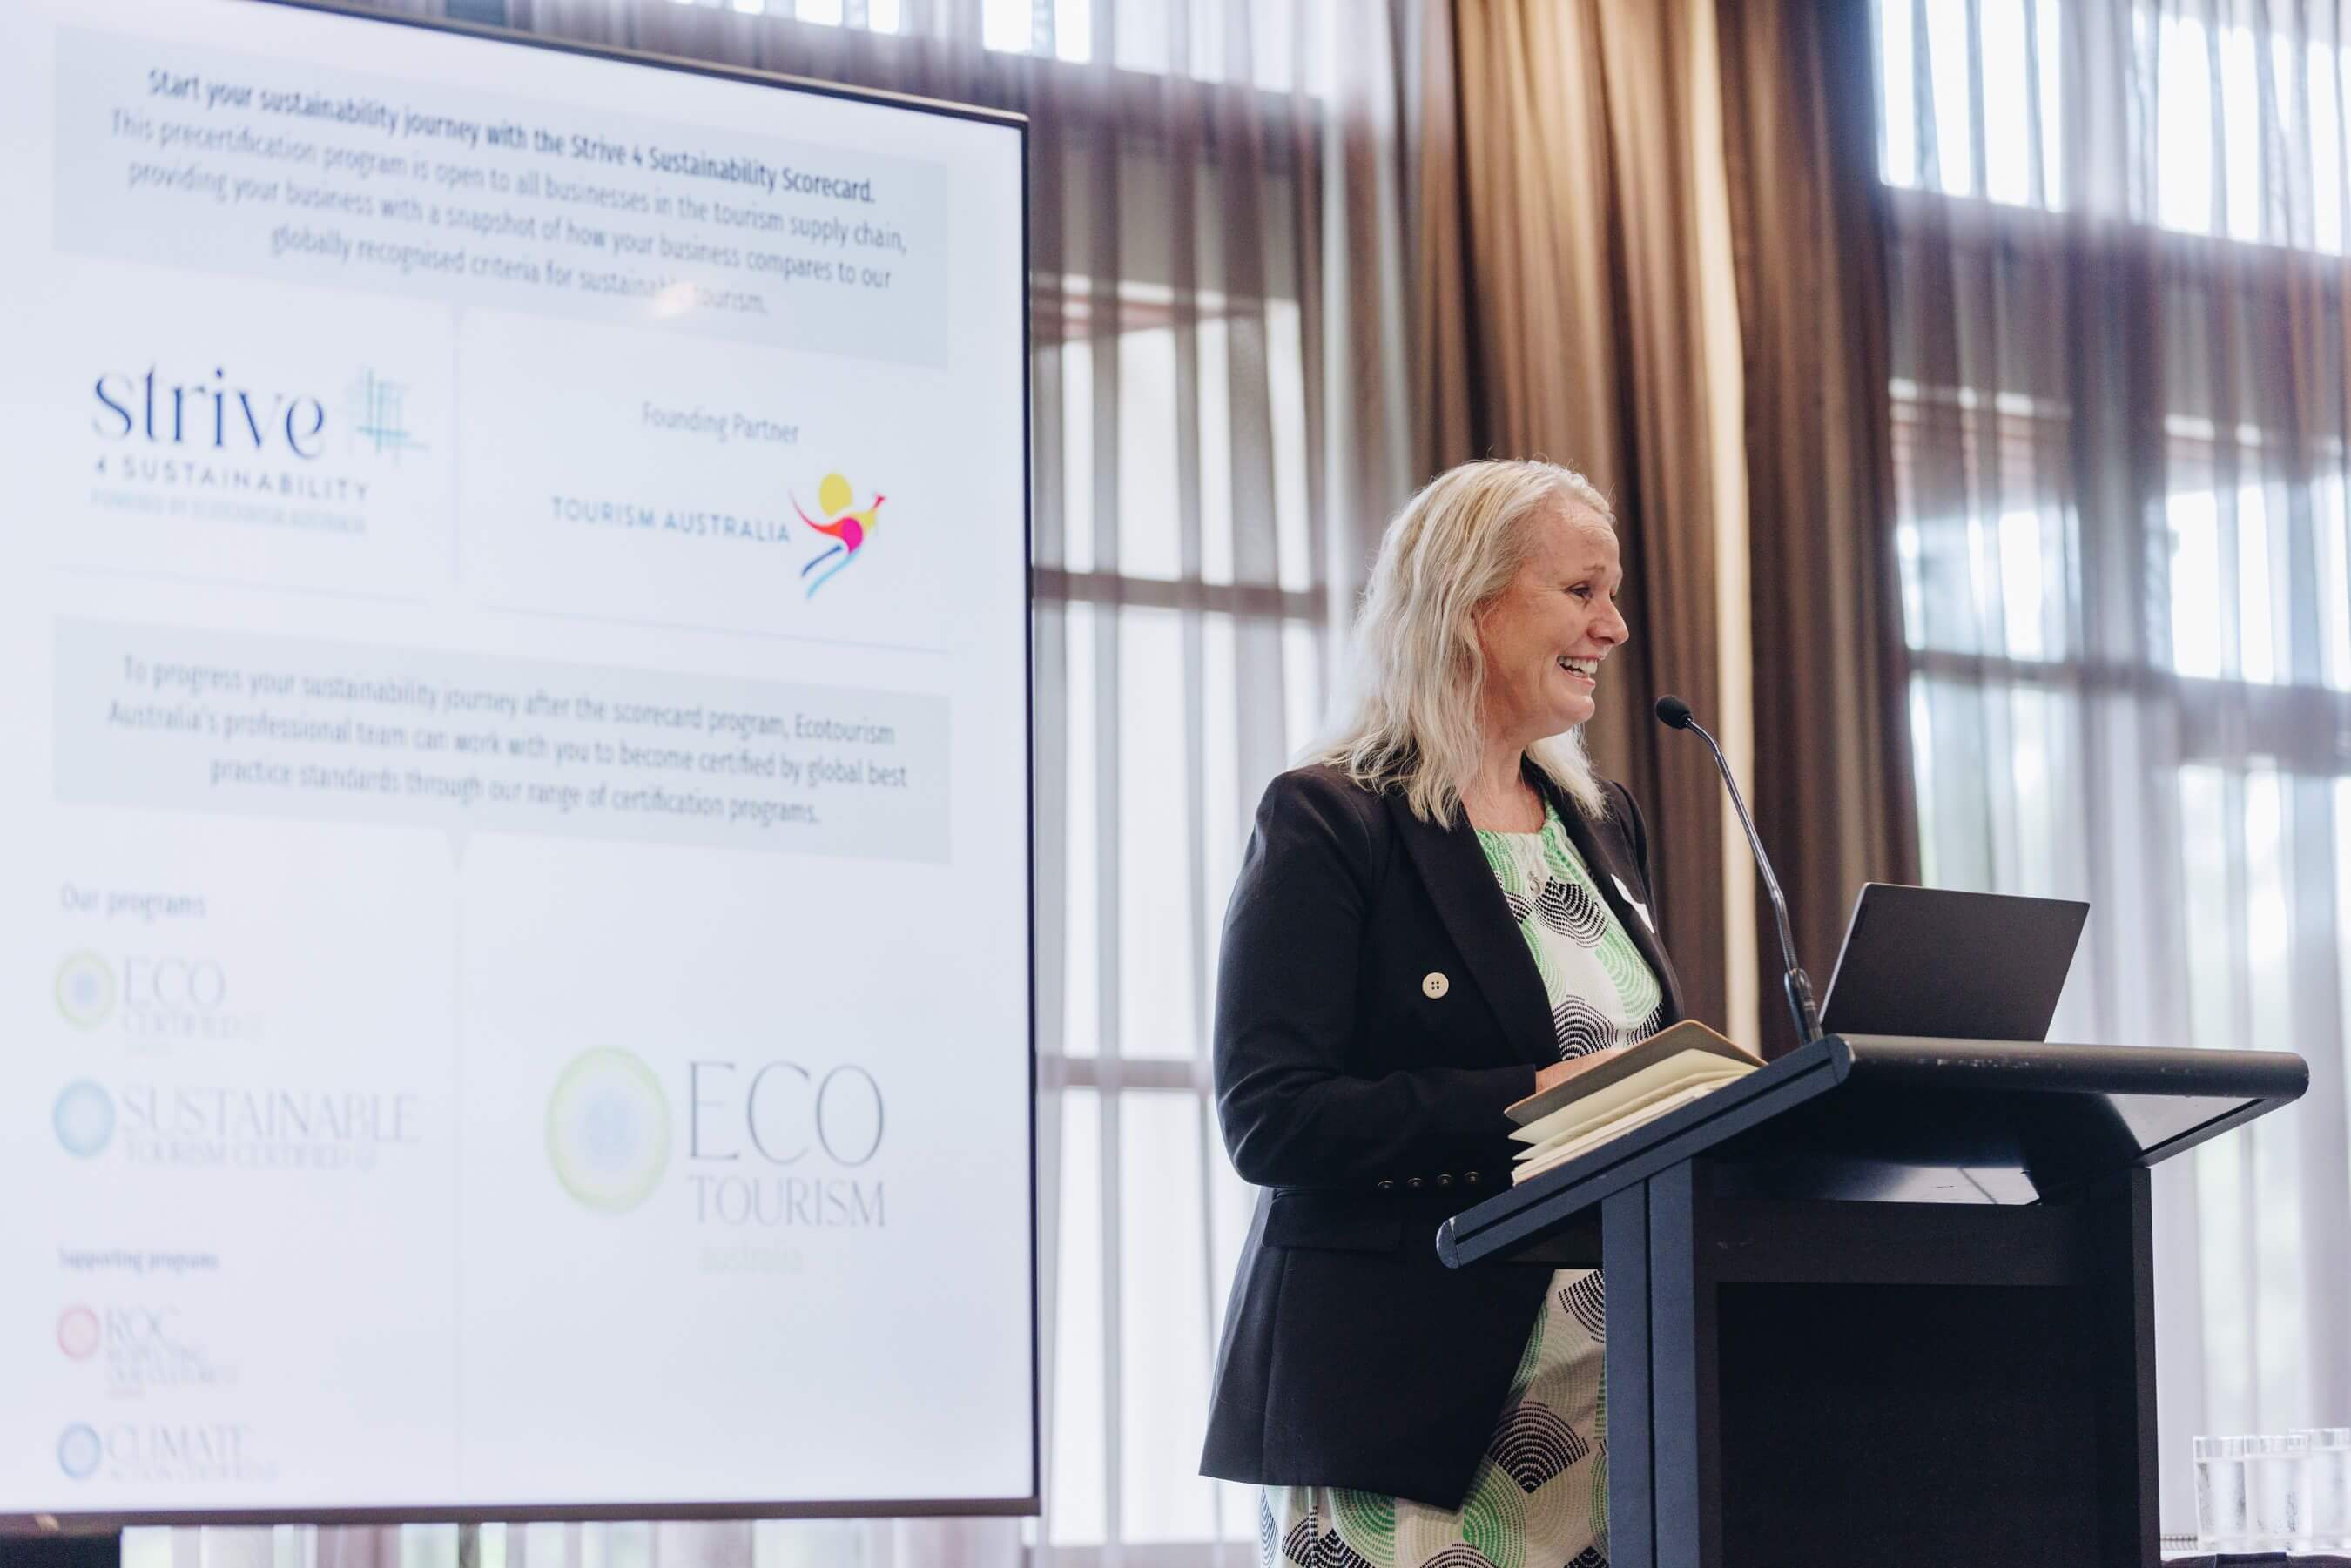 Elissa Keenan, Chief Executive of Ecotourism Australia, addressing Central Coast tourism industry